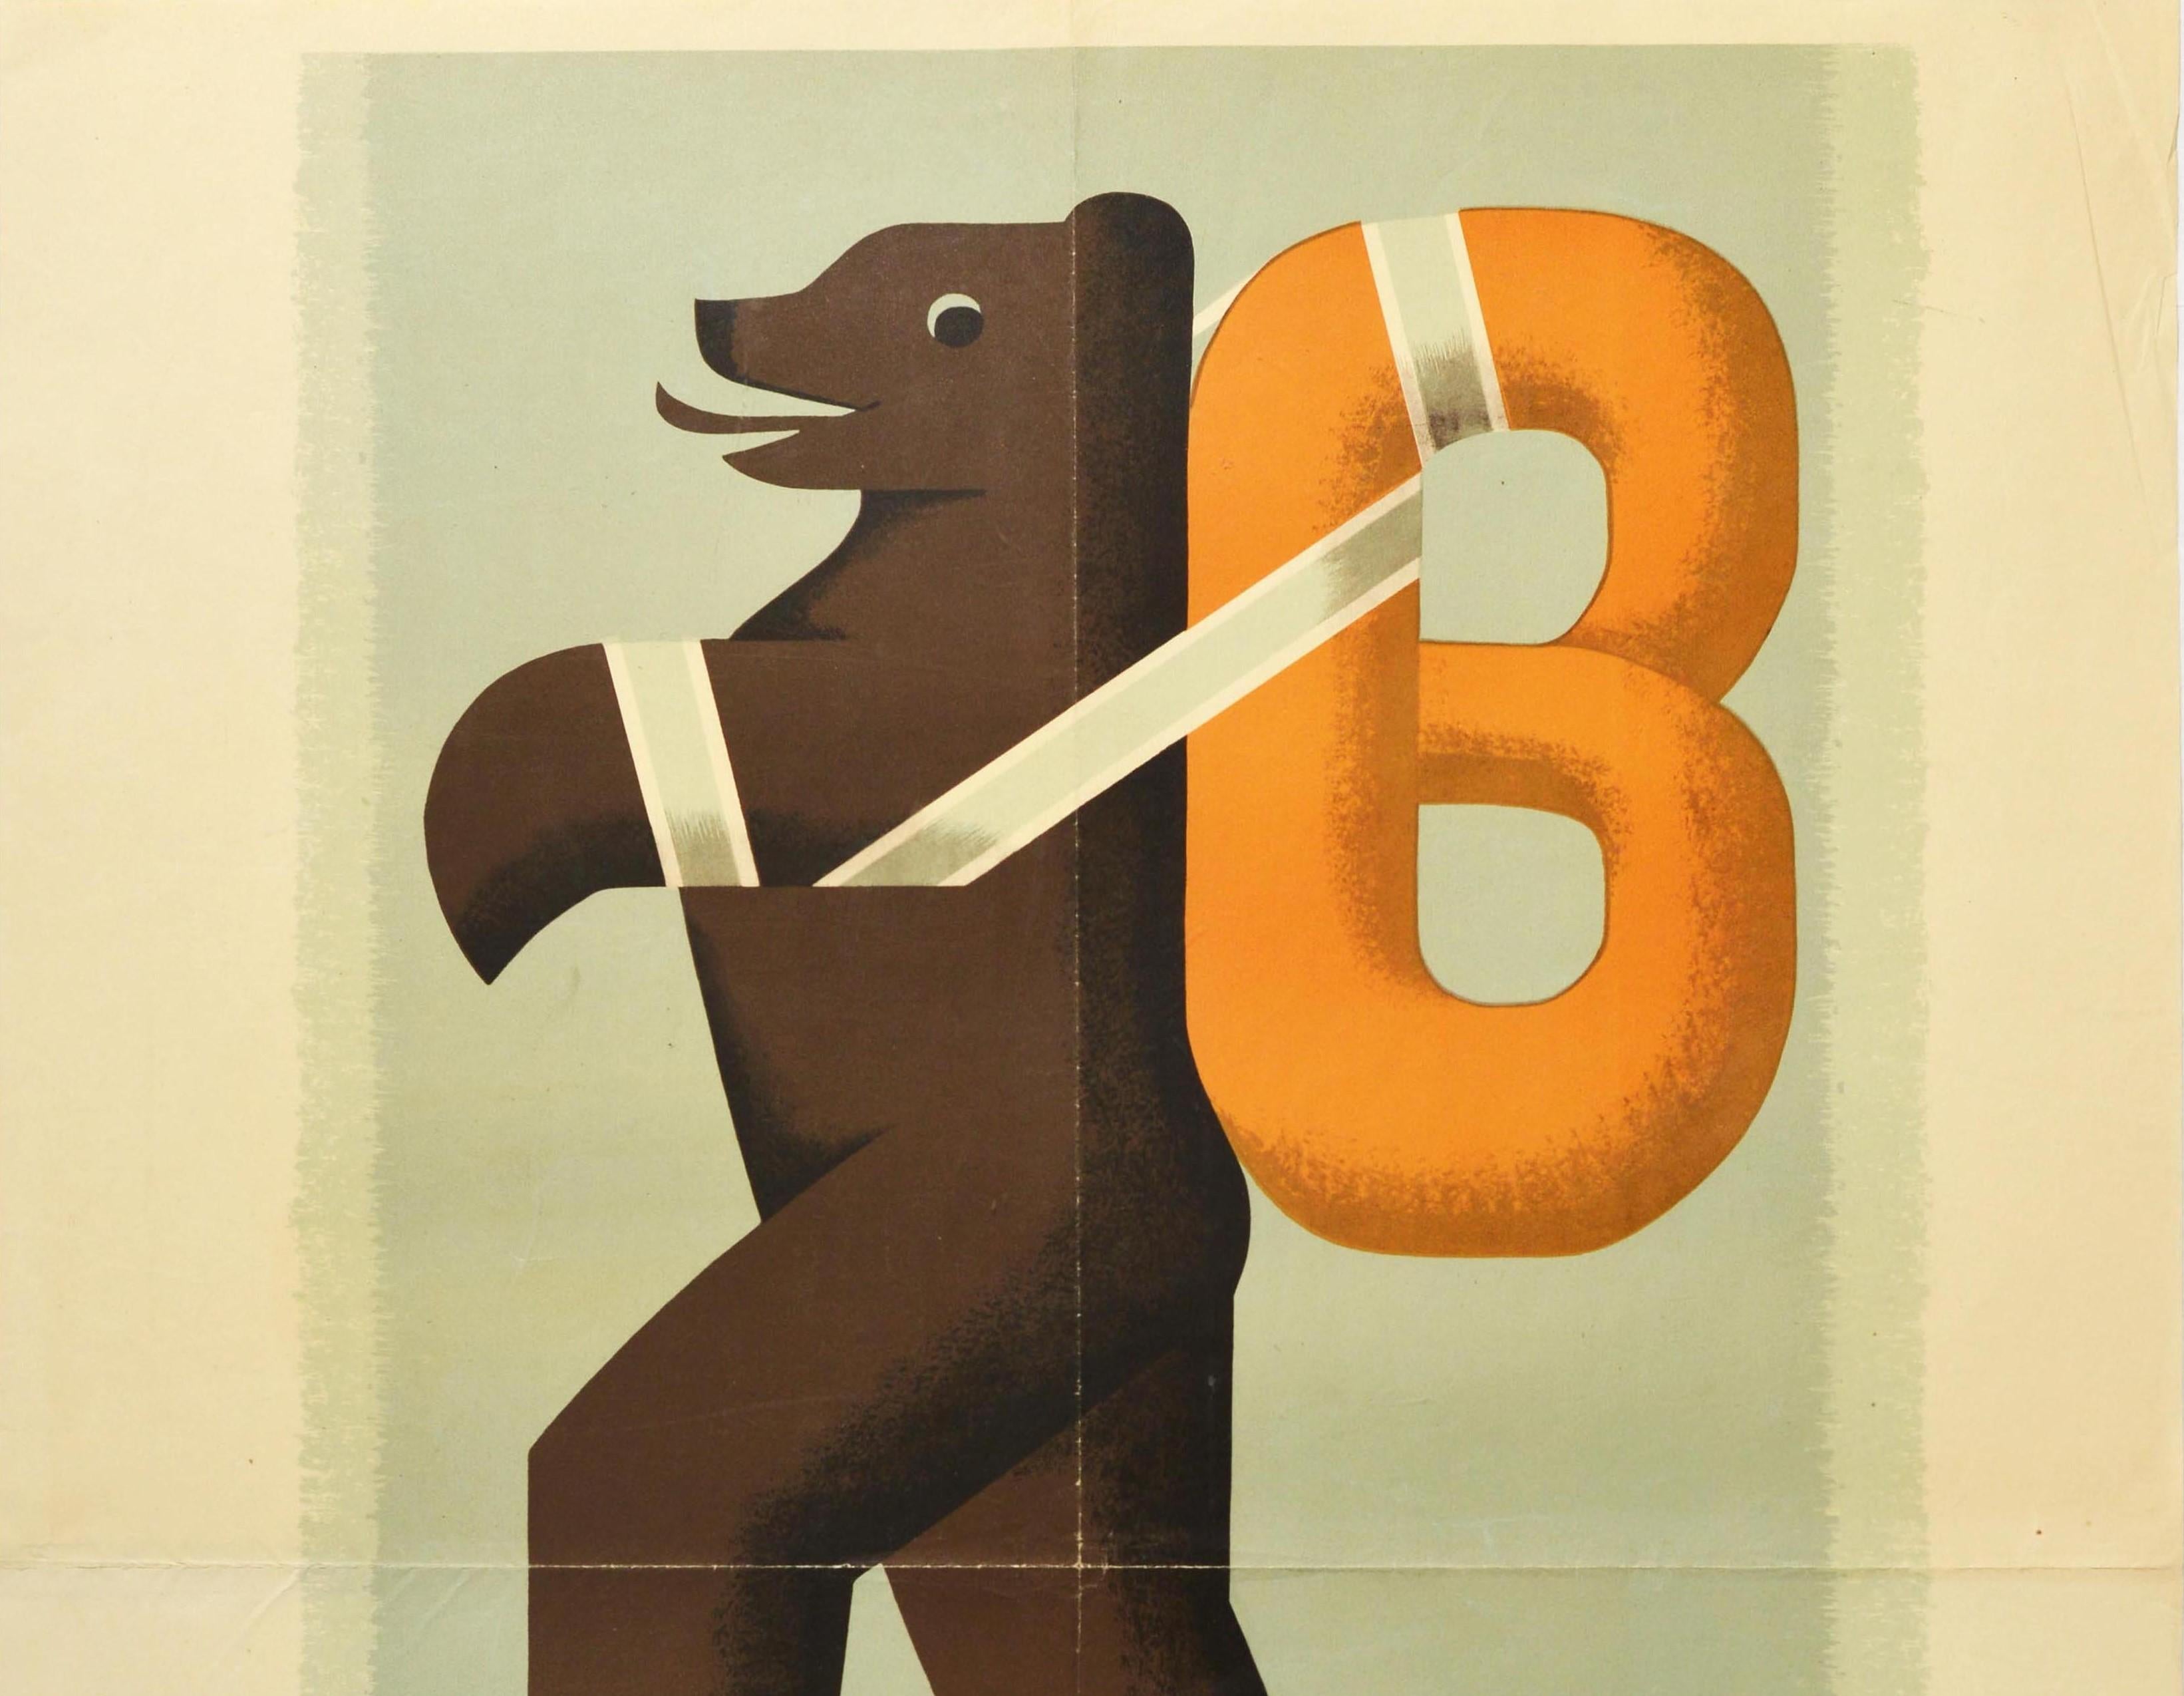 Original Vintage Poster Bakery Exhibition Berlin Bear Pretzel Design Funkturm - Print by Reuter